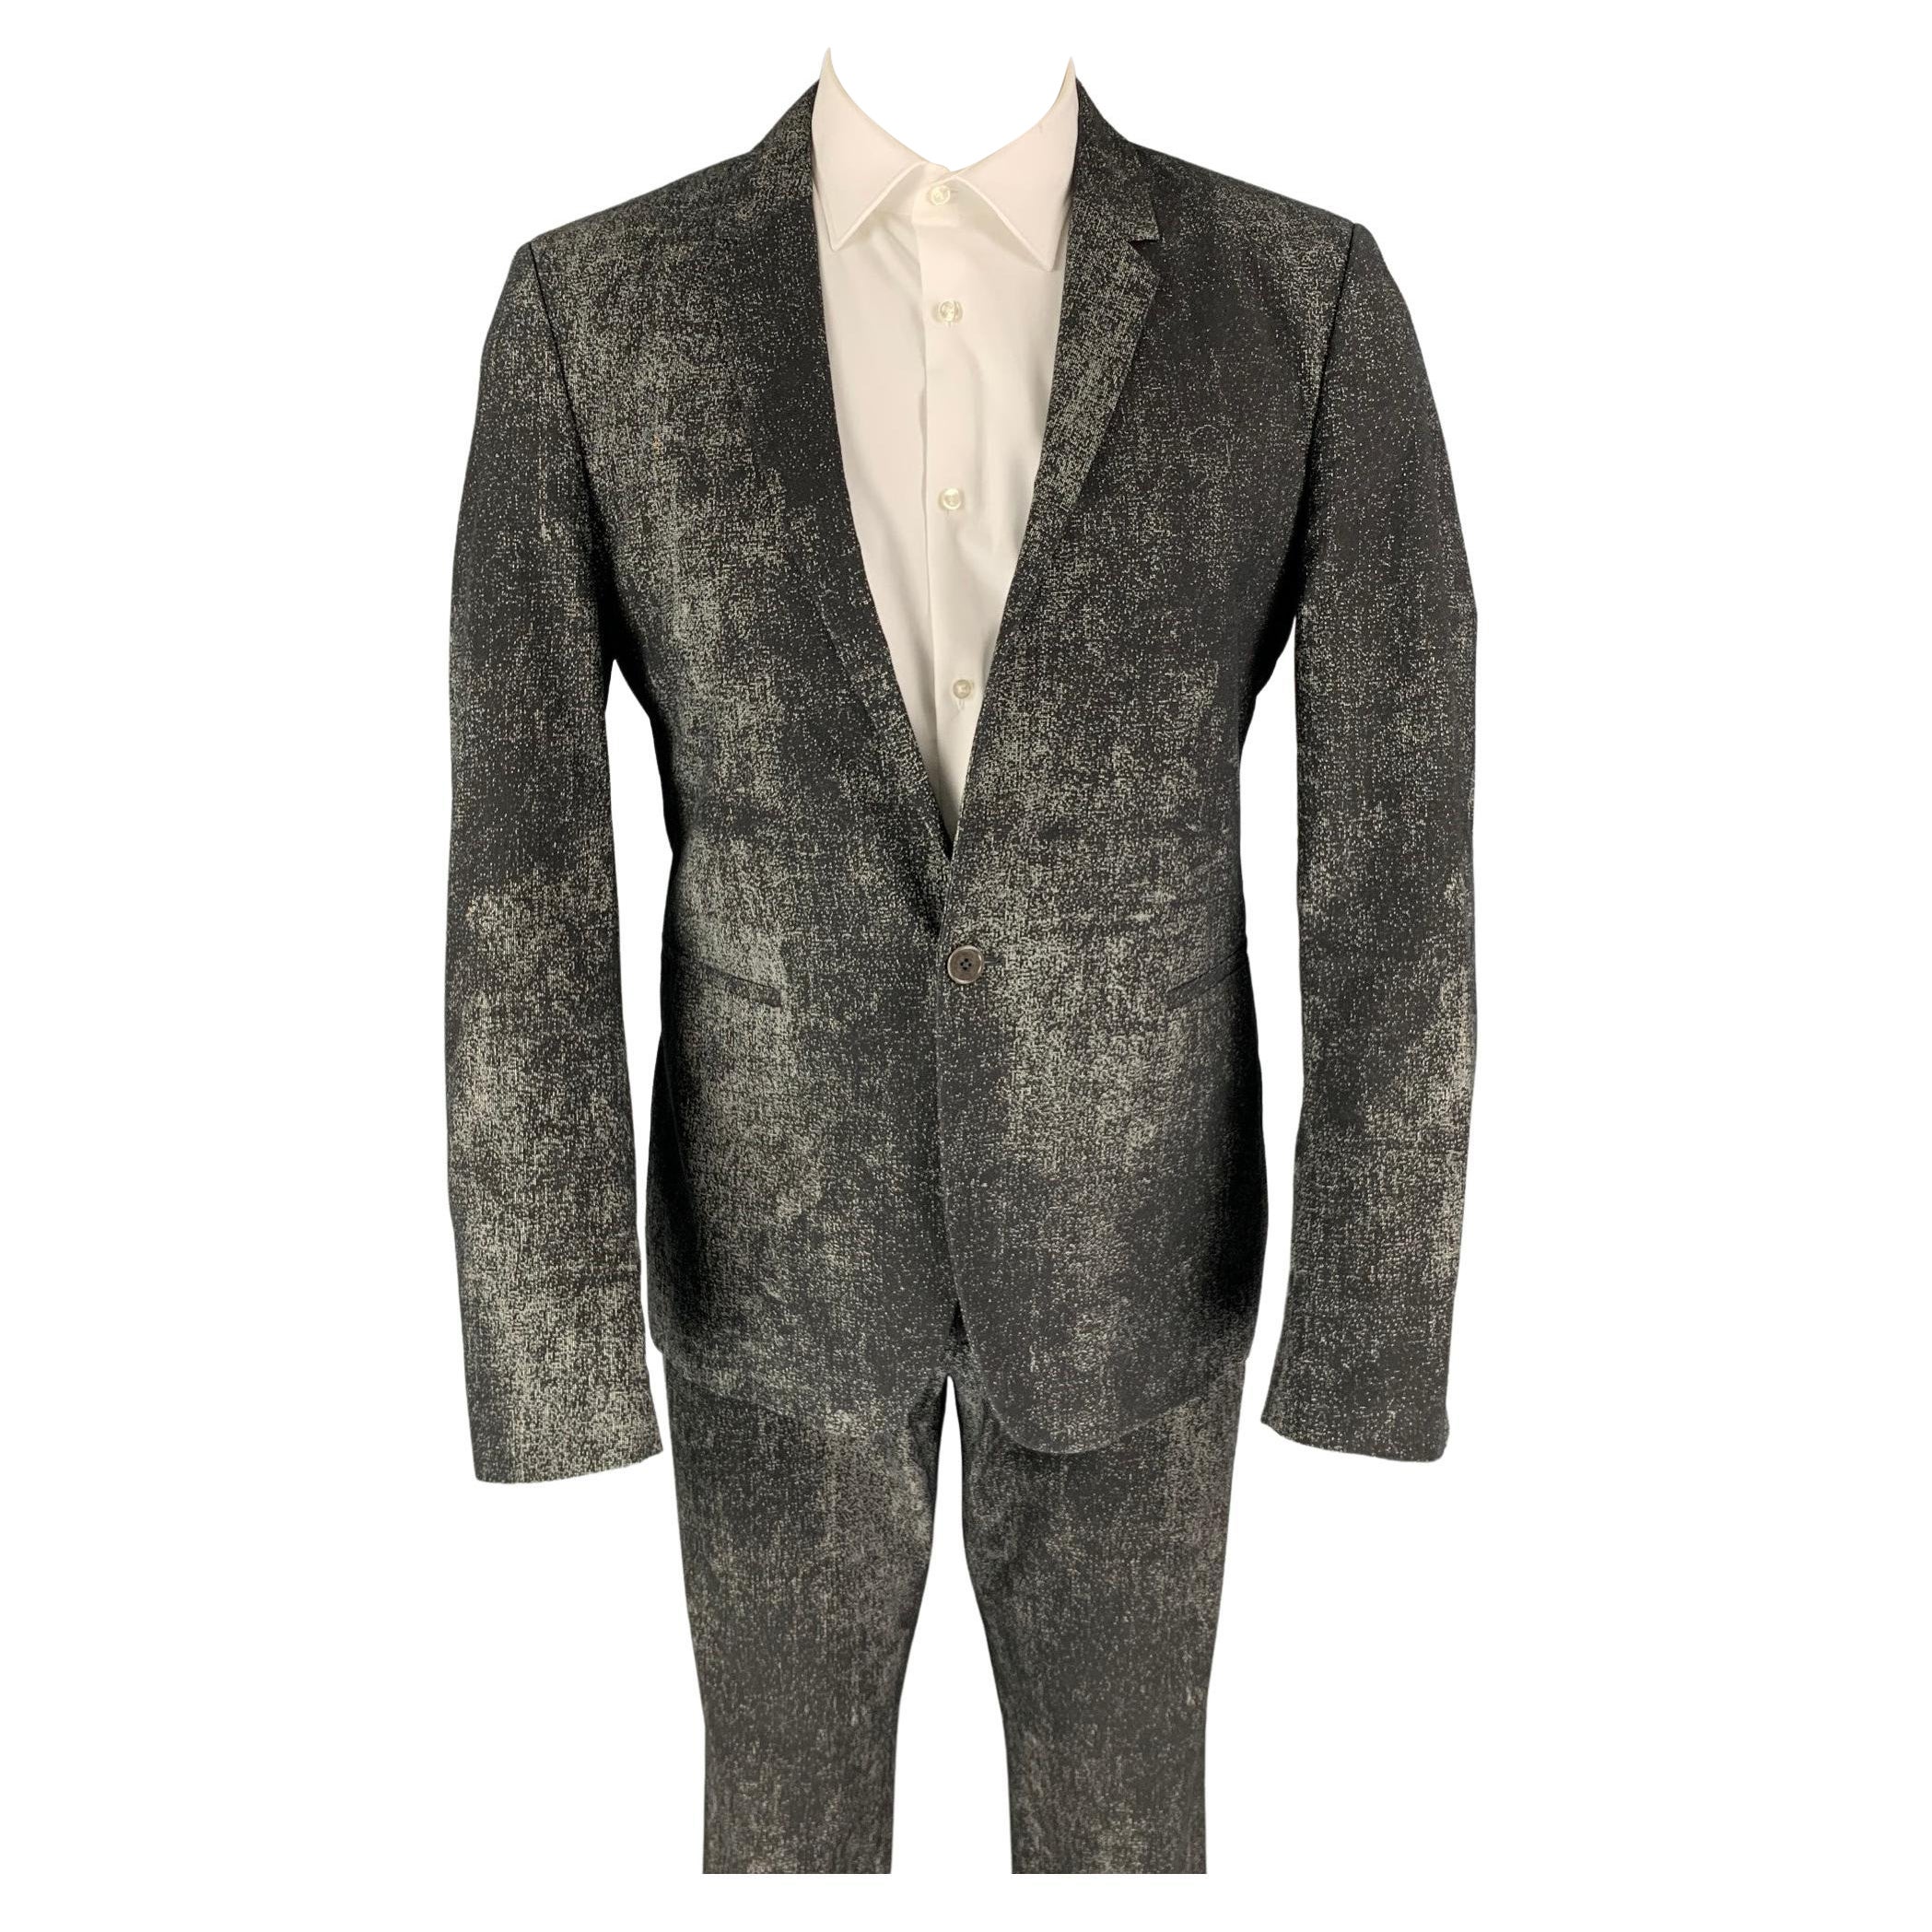 CALVIN KLEIN COLLECTION Size 38 Black & Grey Splattered Cotton Blend Notch Lapel